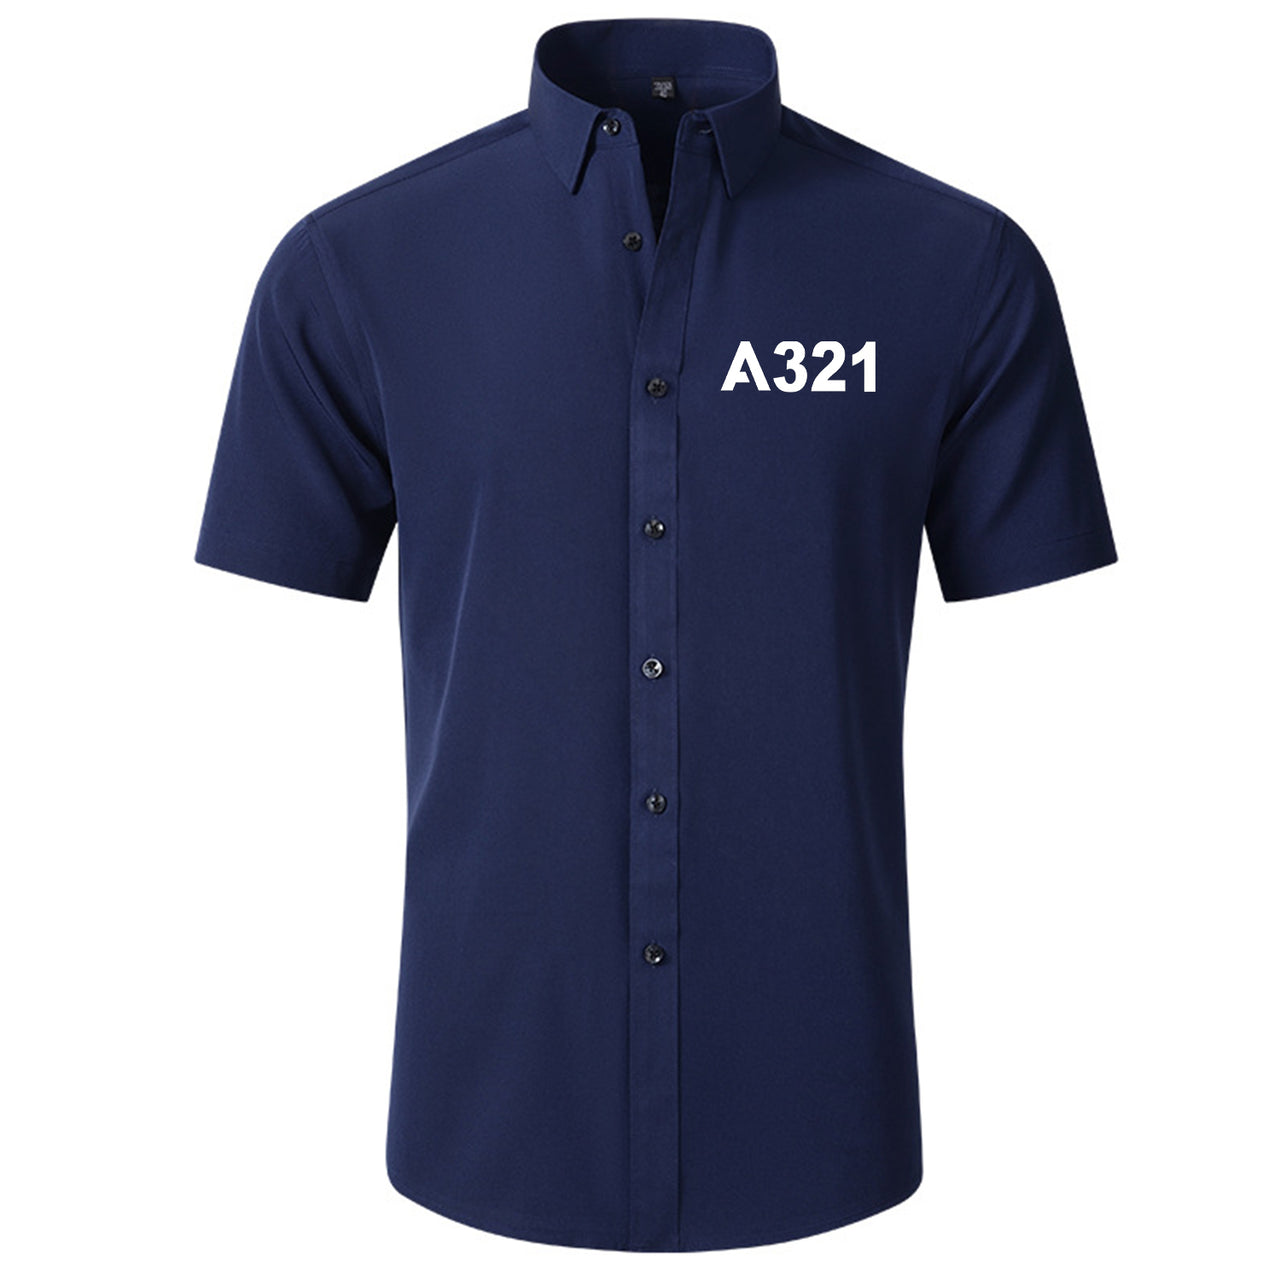 A321 Flat Text Designed Short Sleeve Shirts